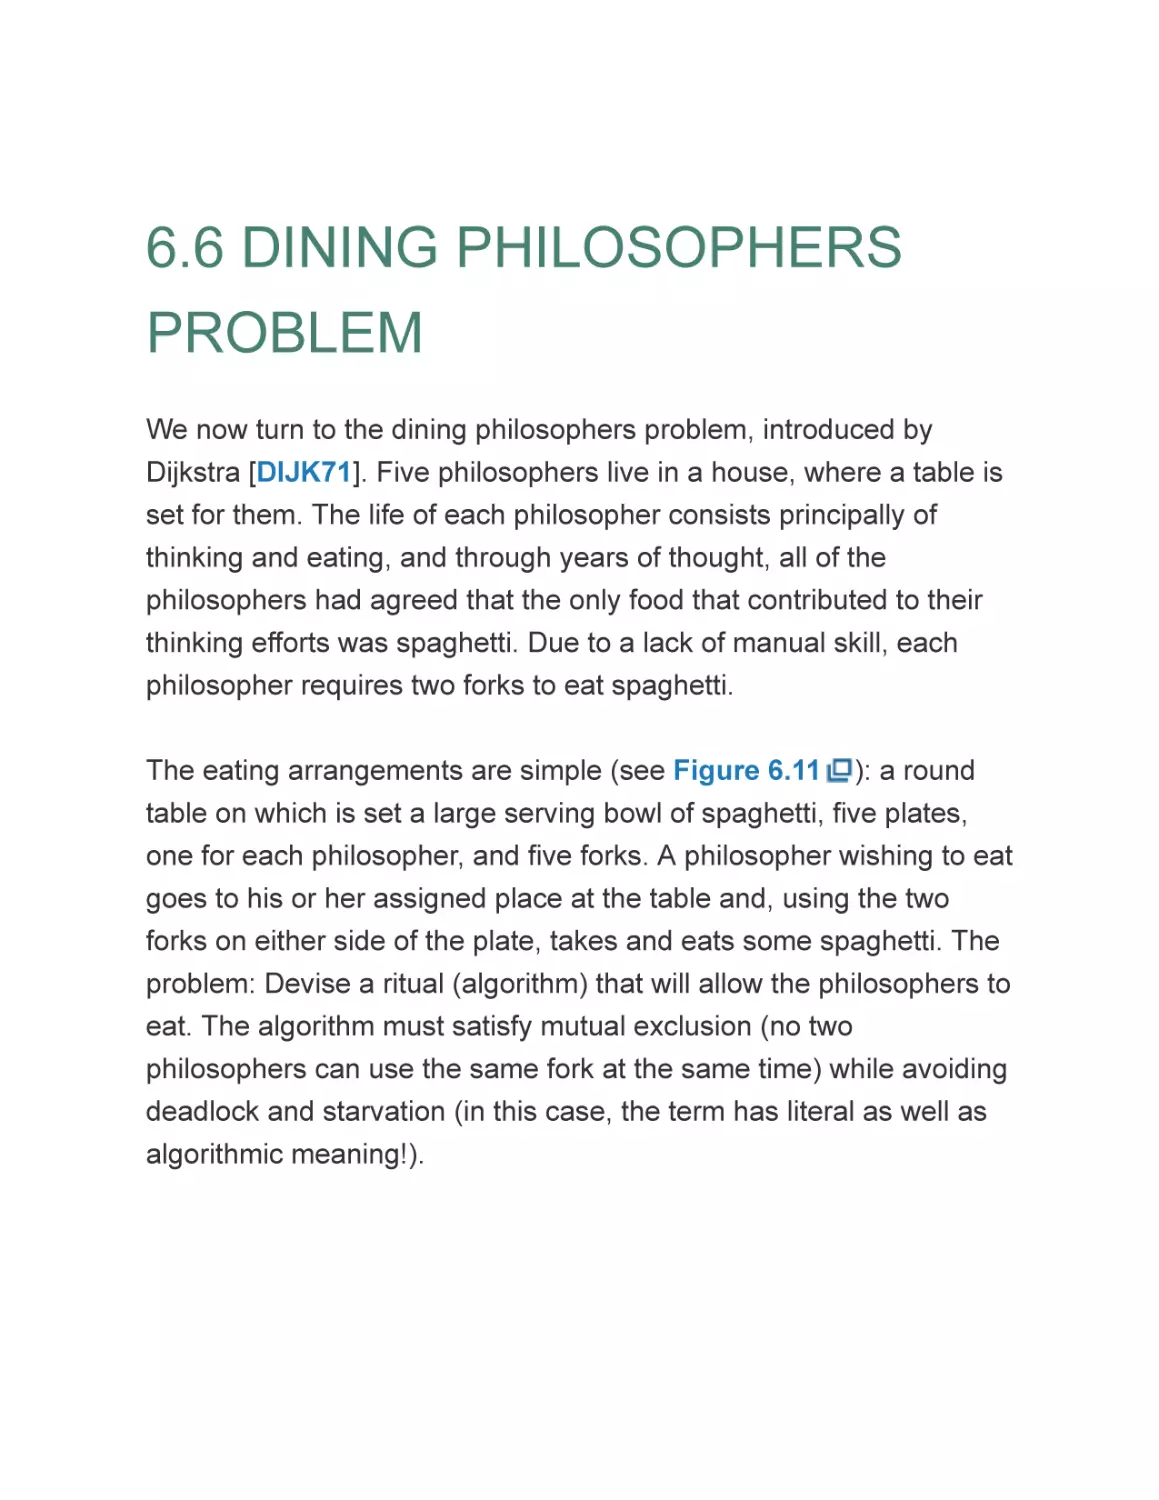 6.6 DINING PHILOSOPHERS PROBLEM